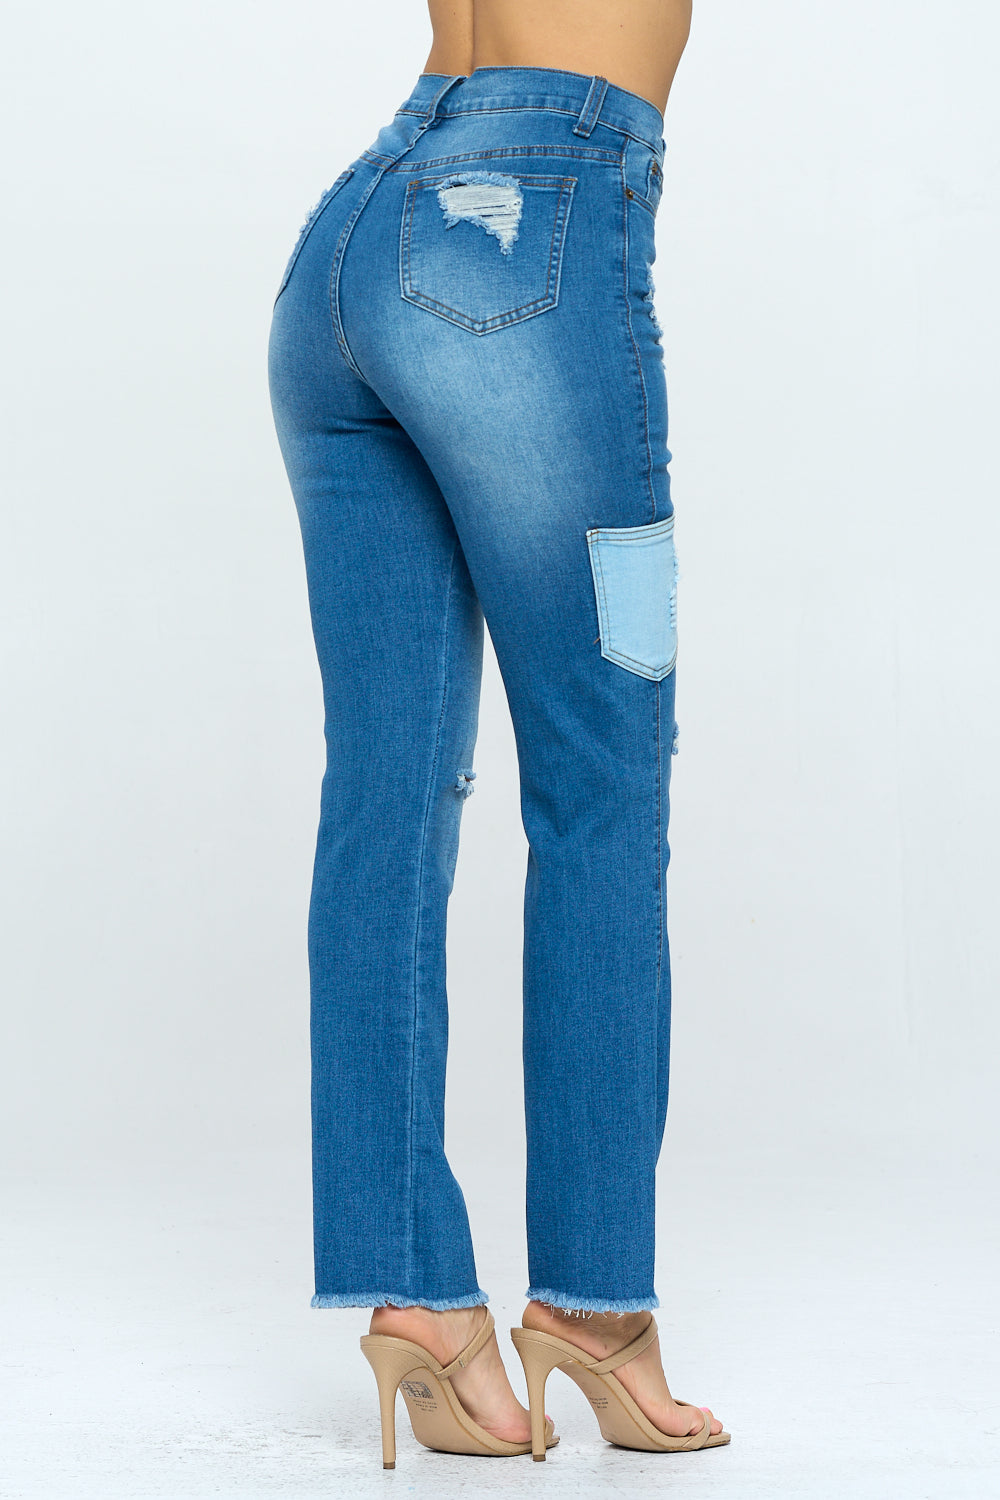 Lucky Girl High Waist Straight Fit Super Stretch Jeans Medium $13 Each